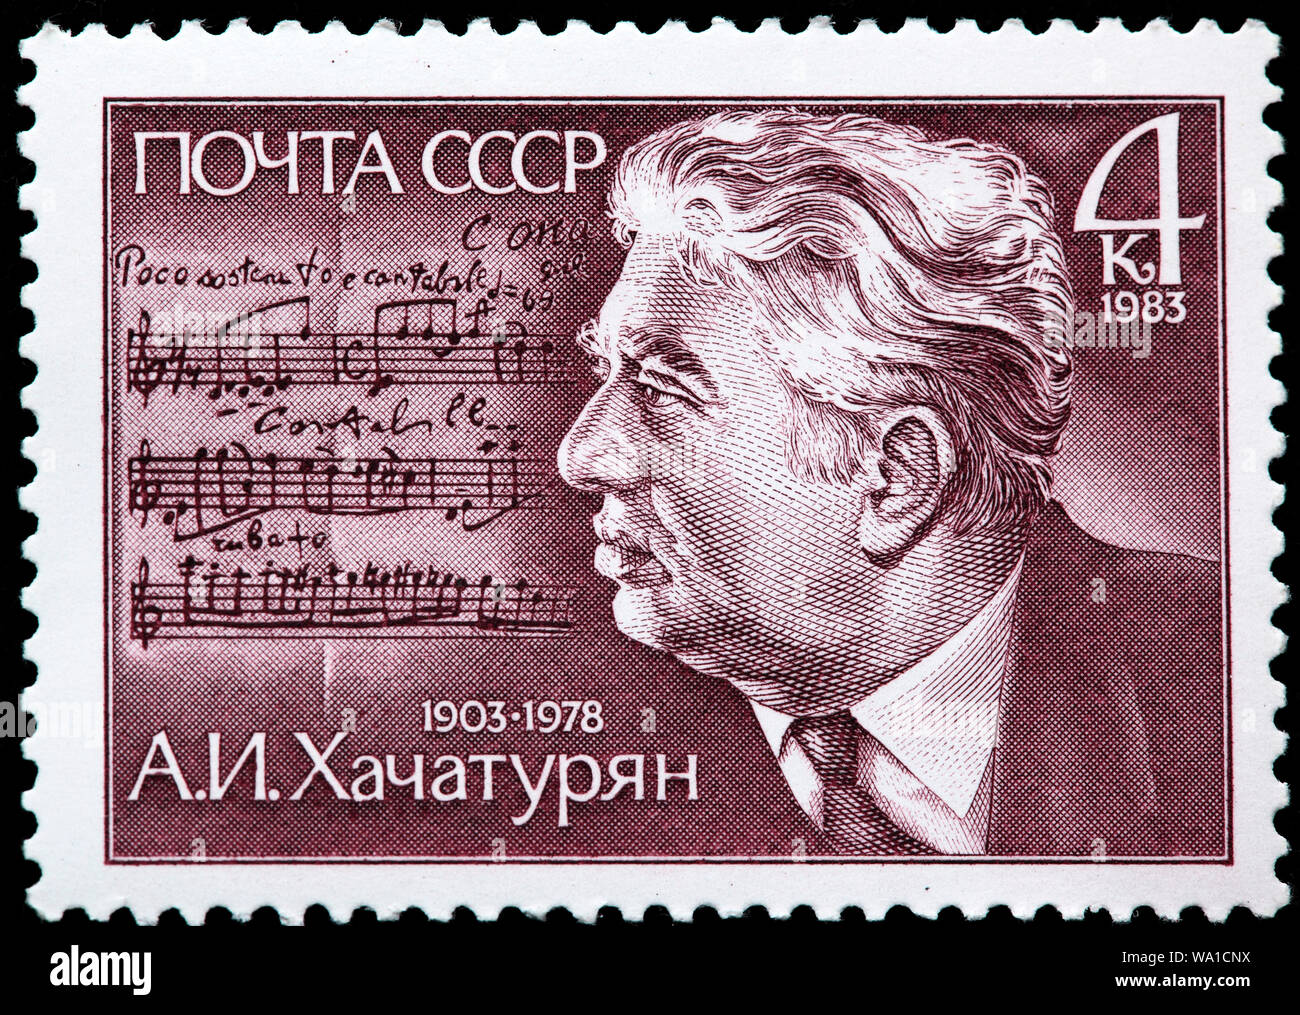 Aram Khachaturian (1903-1978), Soviet Armenian composer, conductor, postage stamp, Russia, USSR, 1983 Stock Photo